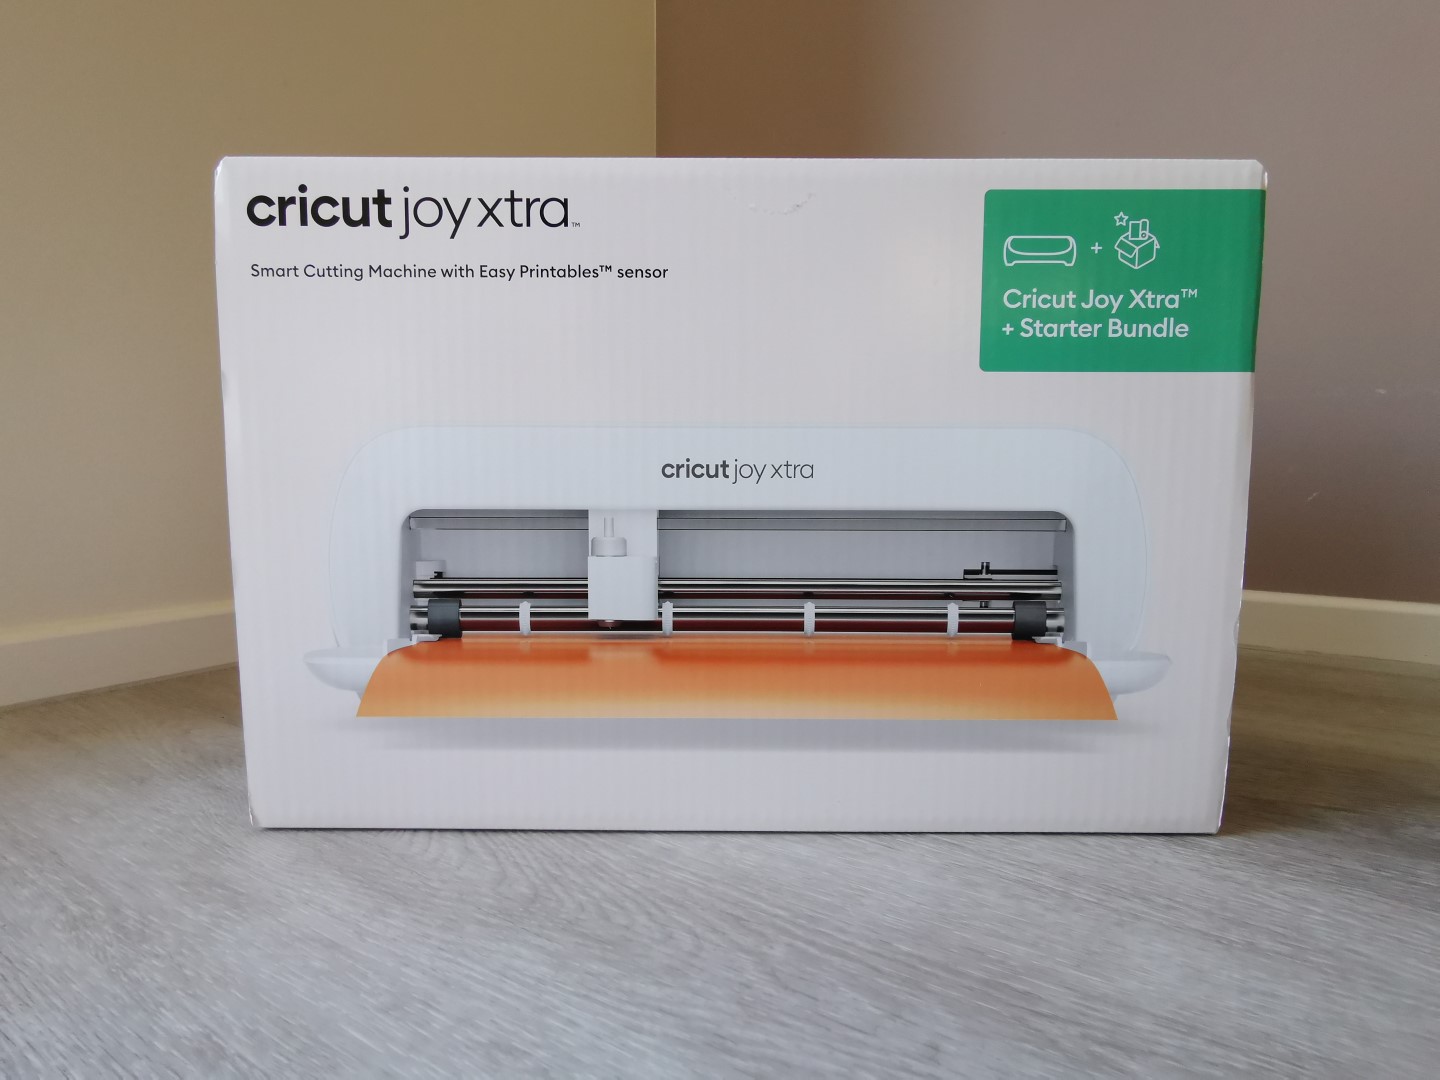 Cricut Joy Xtra™ - the best Cricut® for beginners!